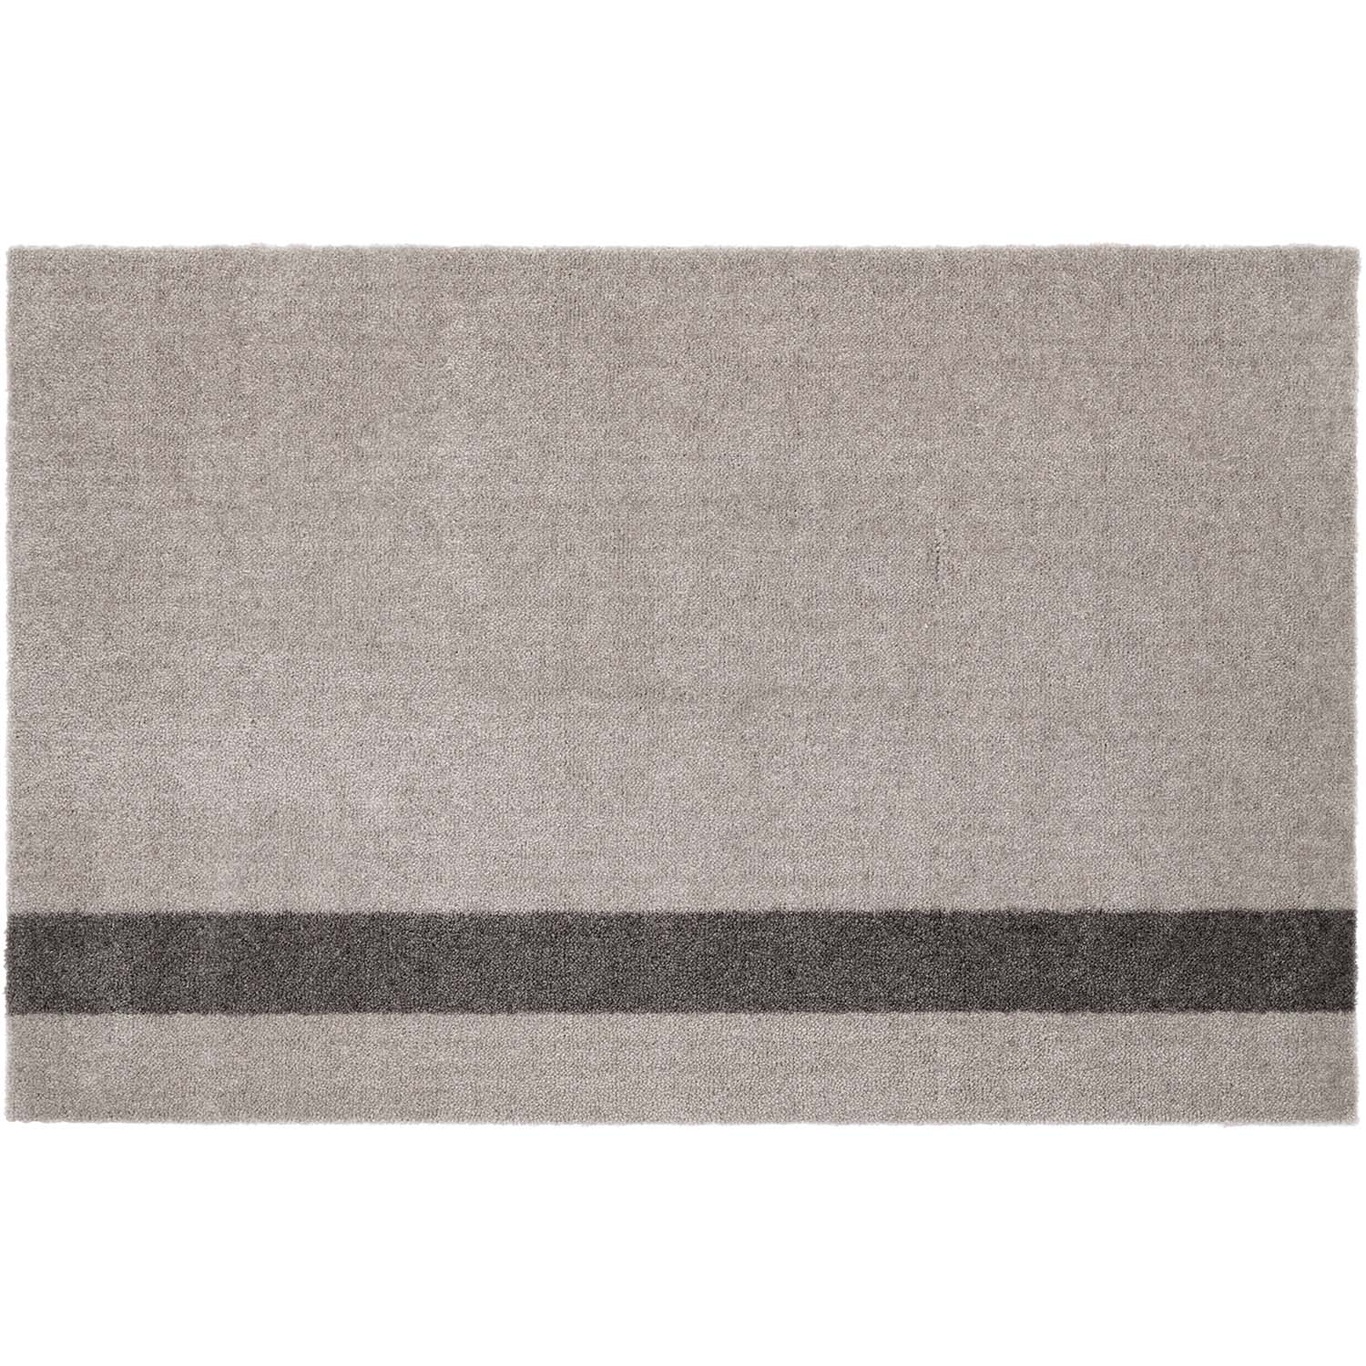 Stripes Matto Vaaleanharmaa / Steel Grey, 60x90 cm